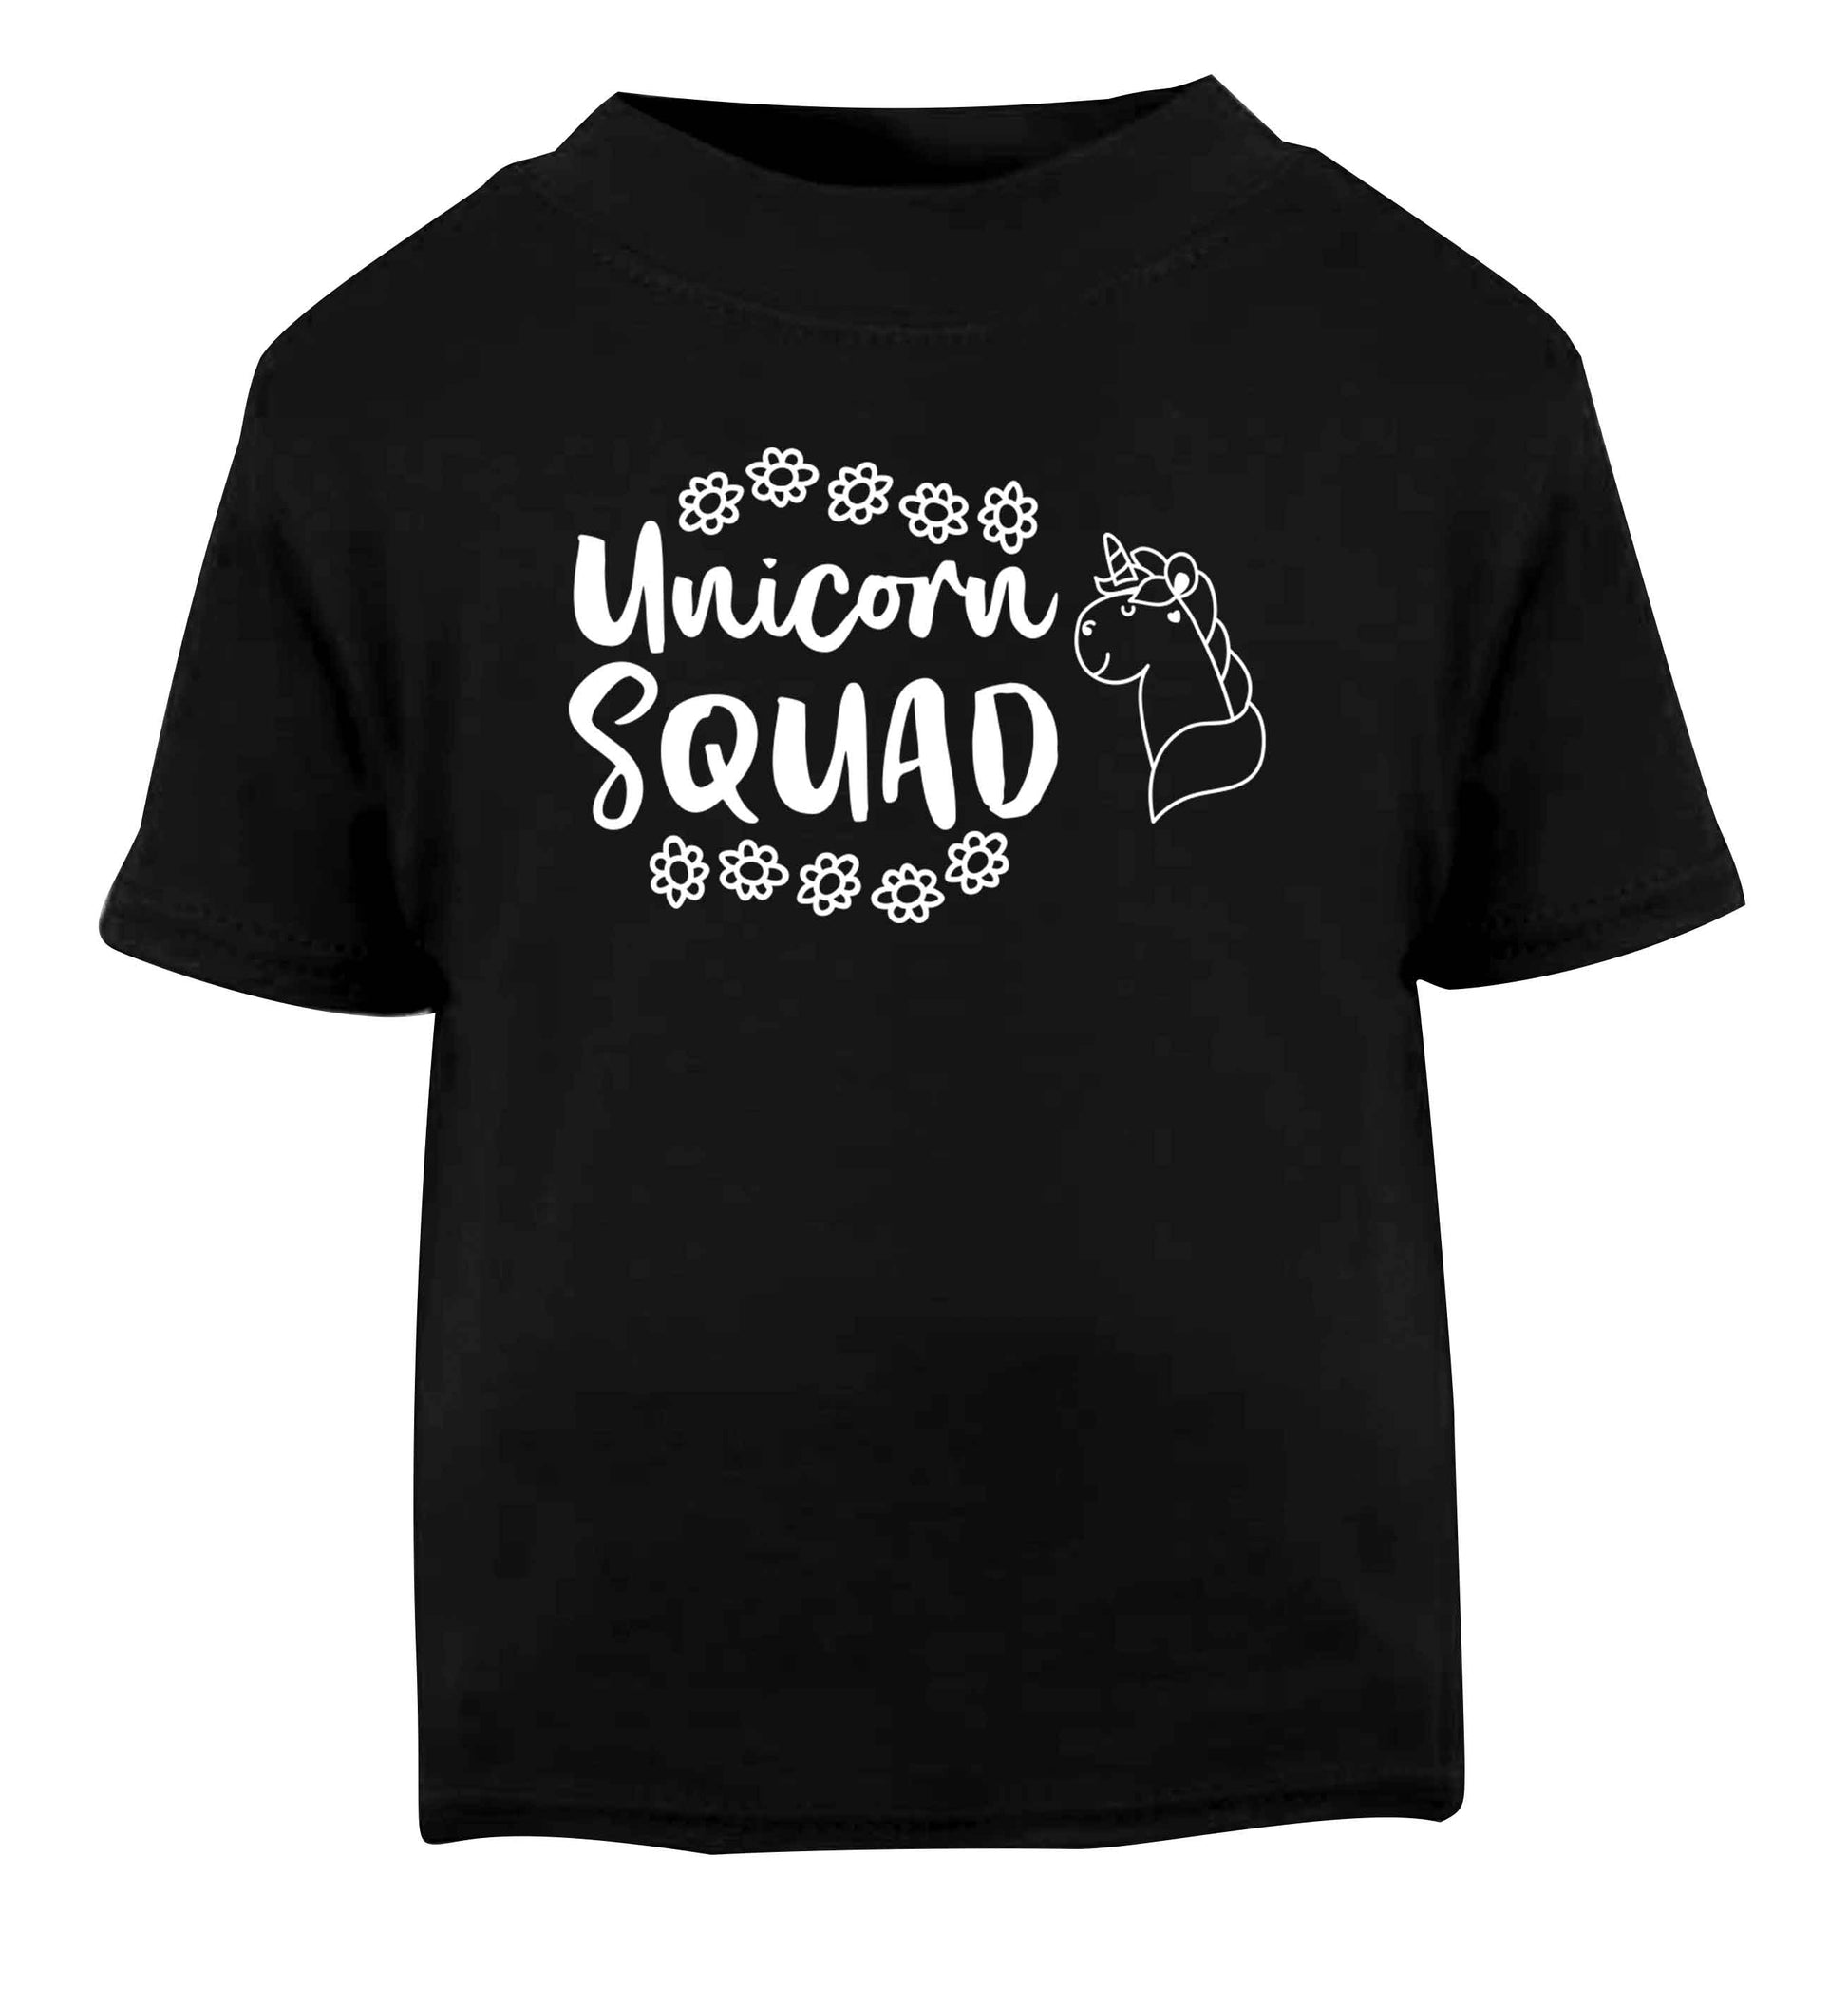 Unicorn Squad Black Baby Toddler Tshirt 2 years